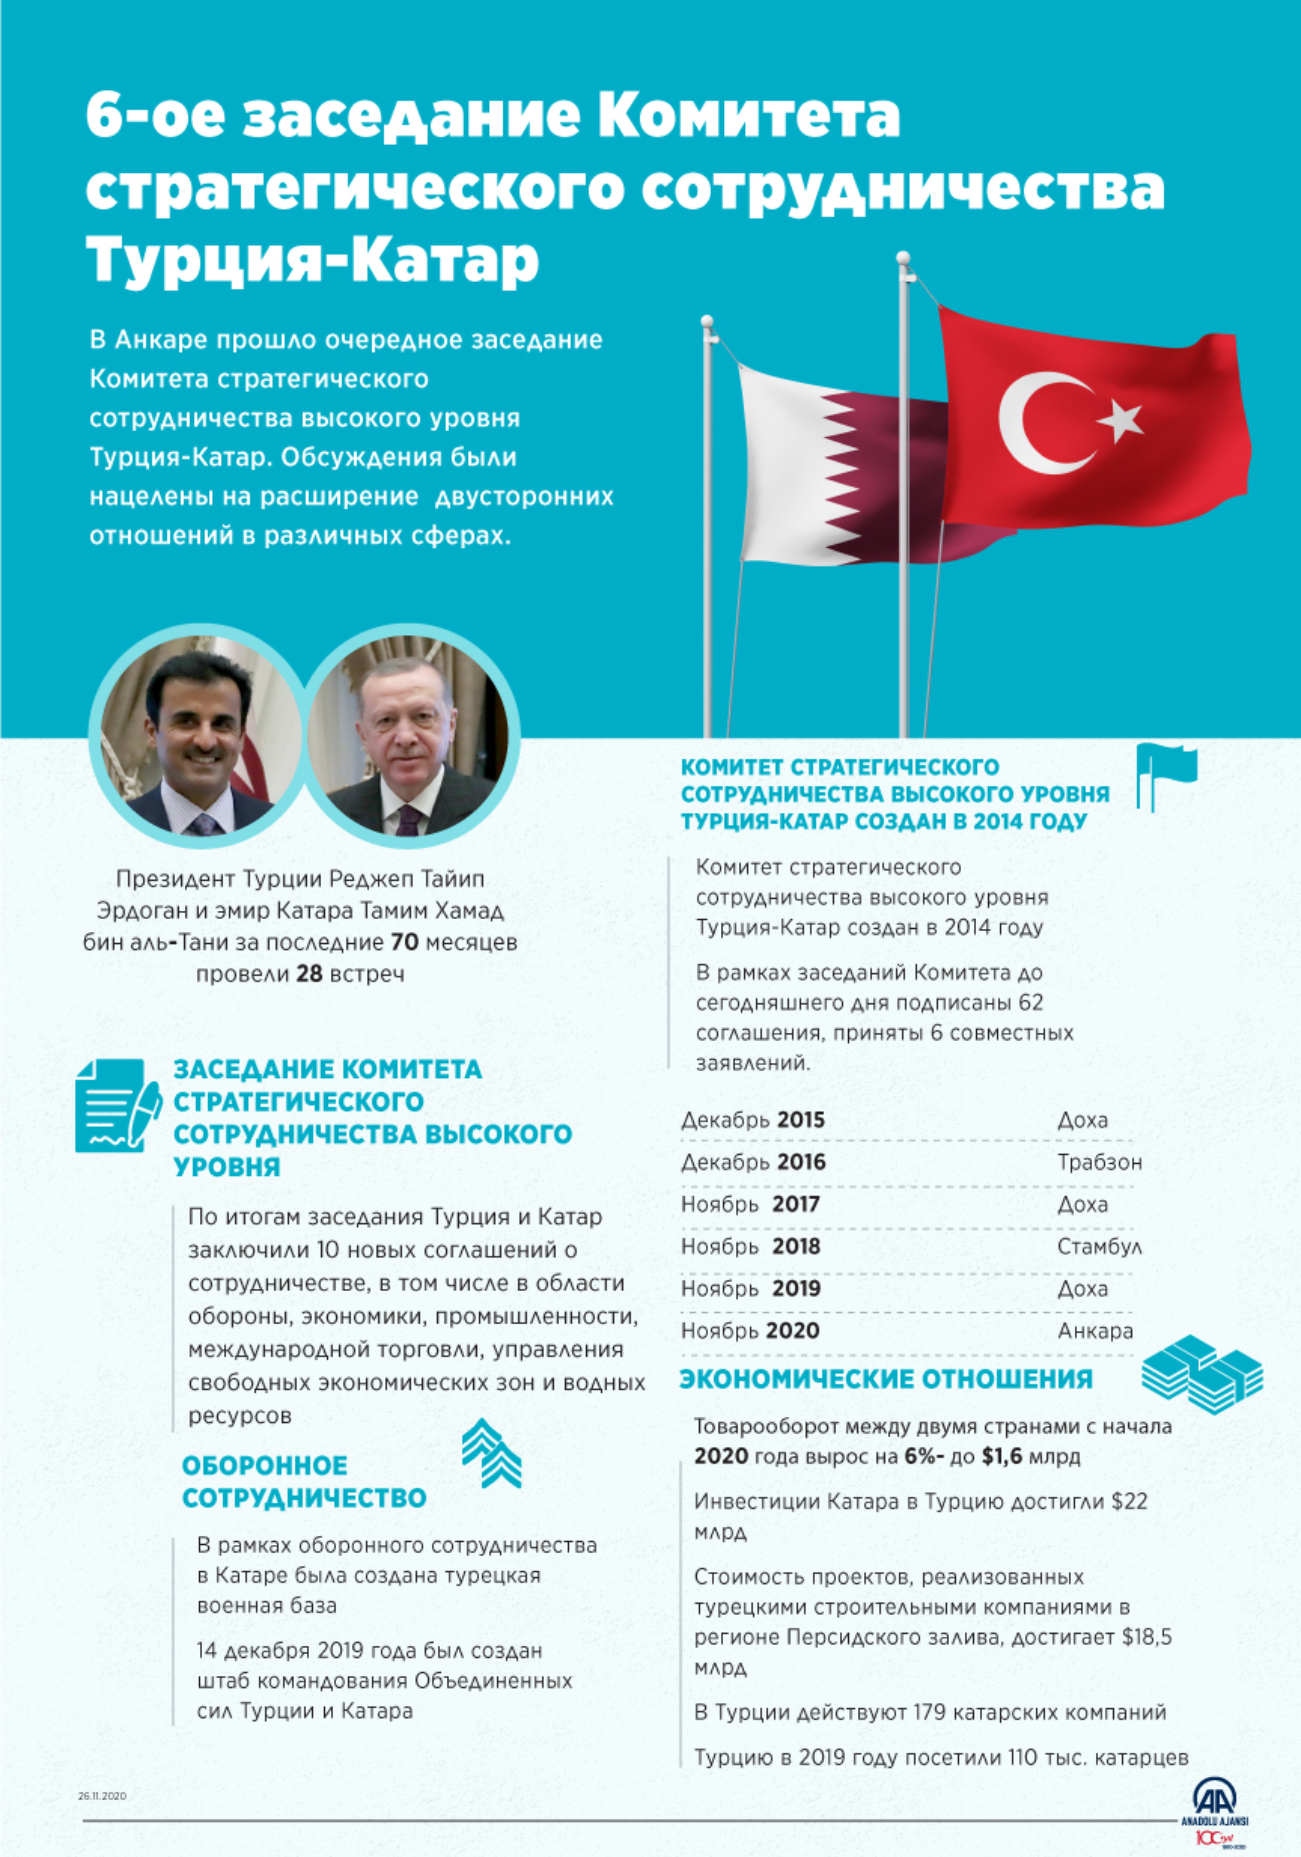 В Анкаре обсуждают сотрудничество Турции и Катара